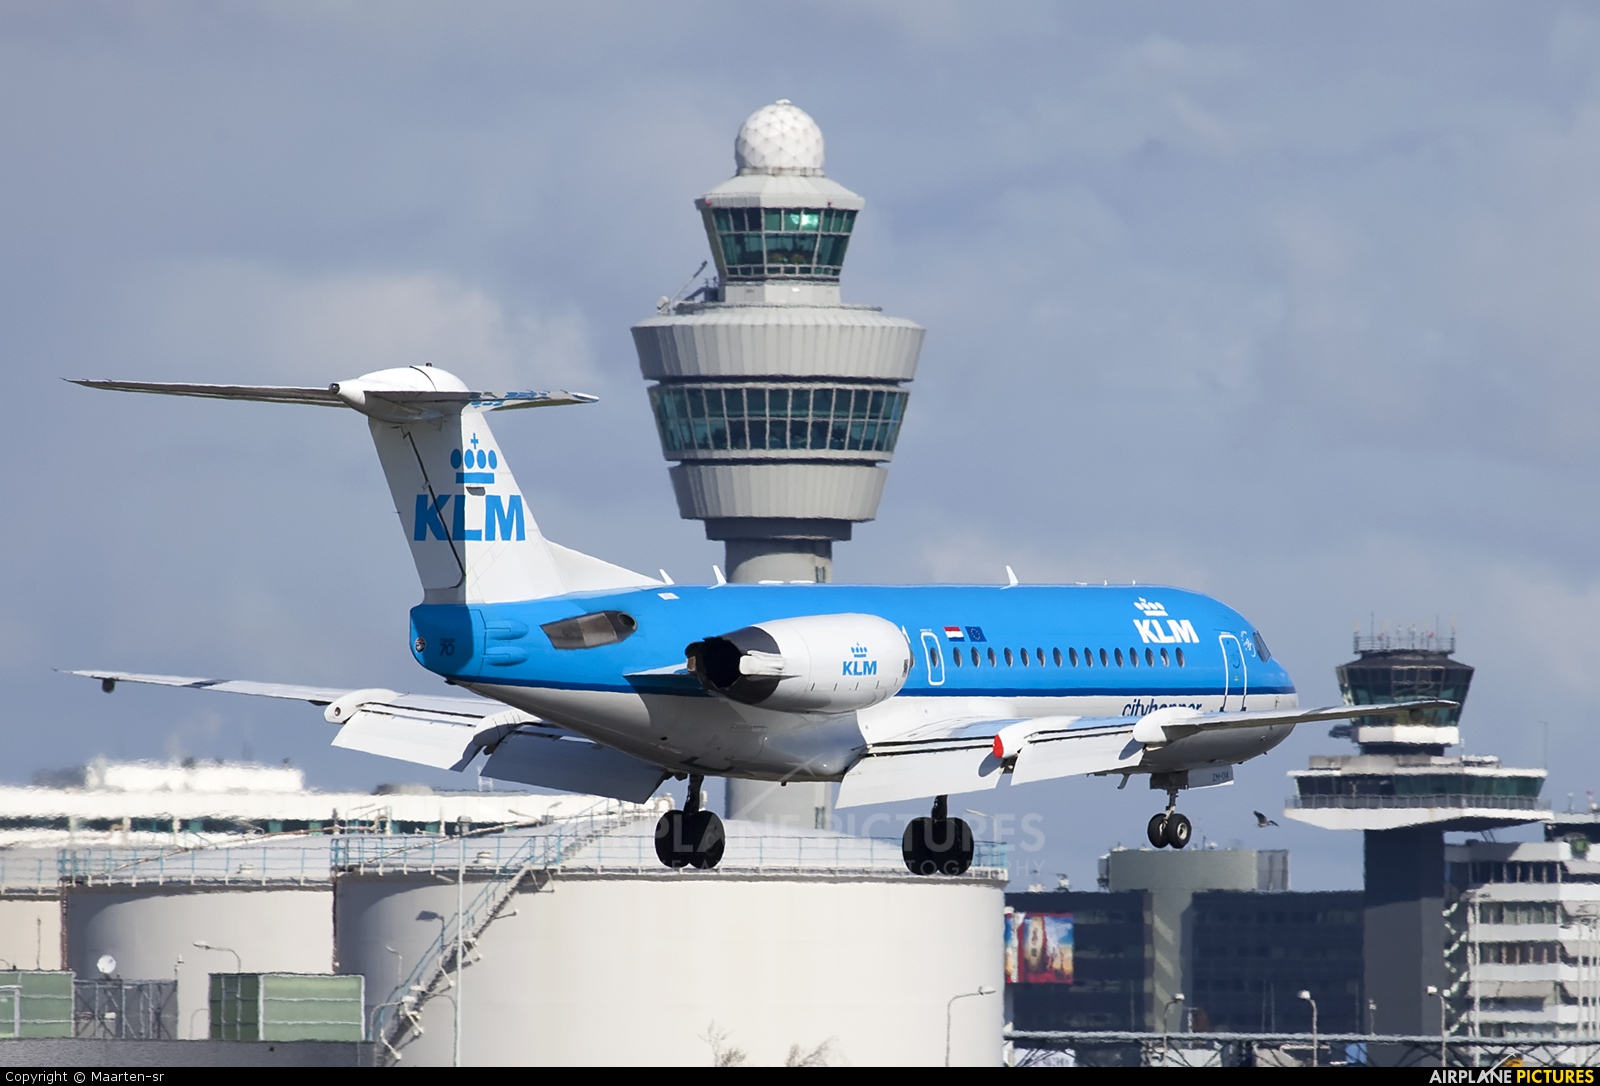 KLM Cityhopper PH-KZM aircraft at Amsterdam - Schiphol